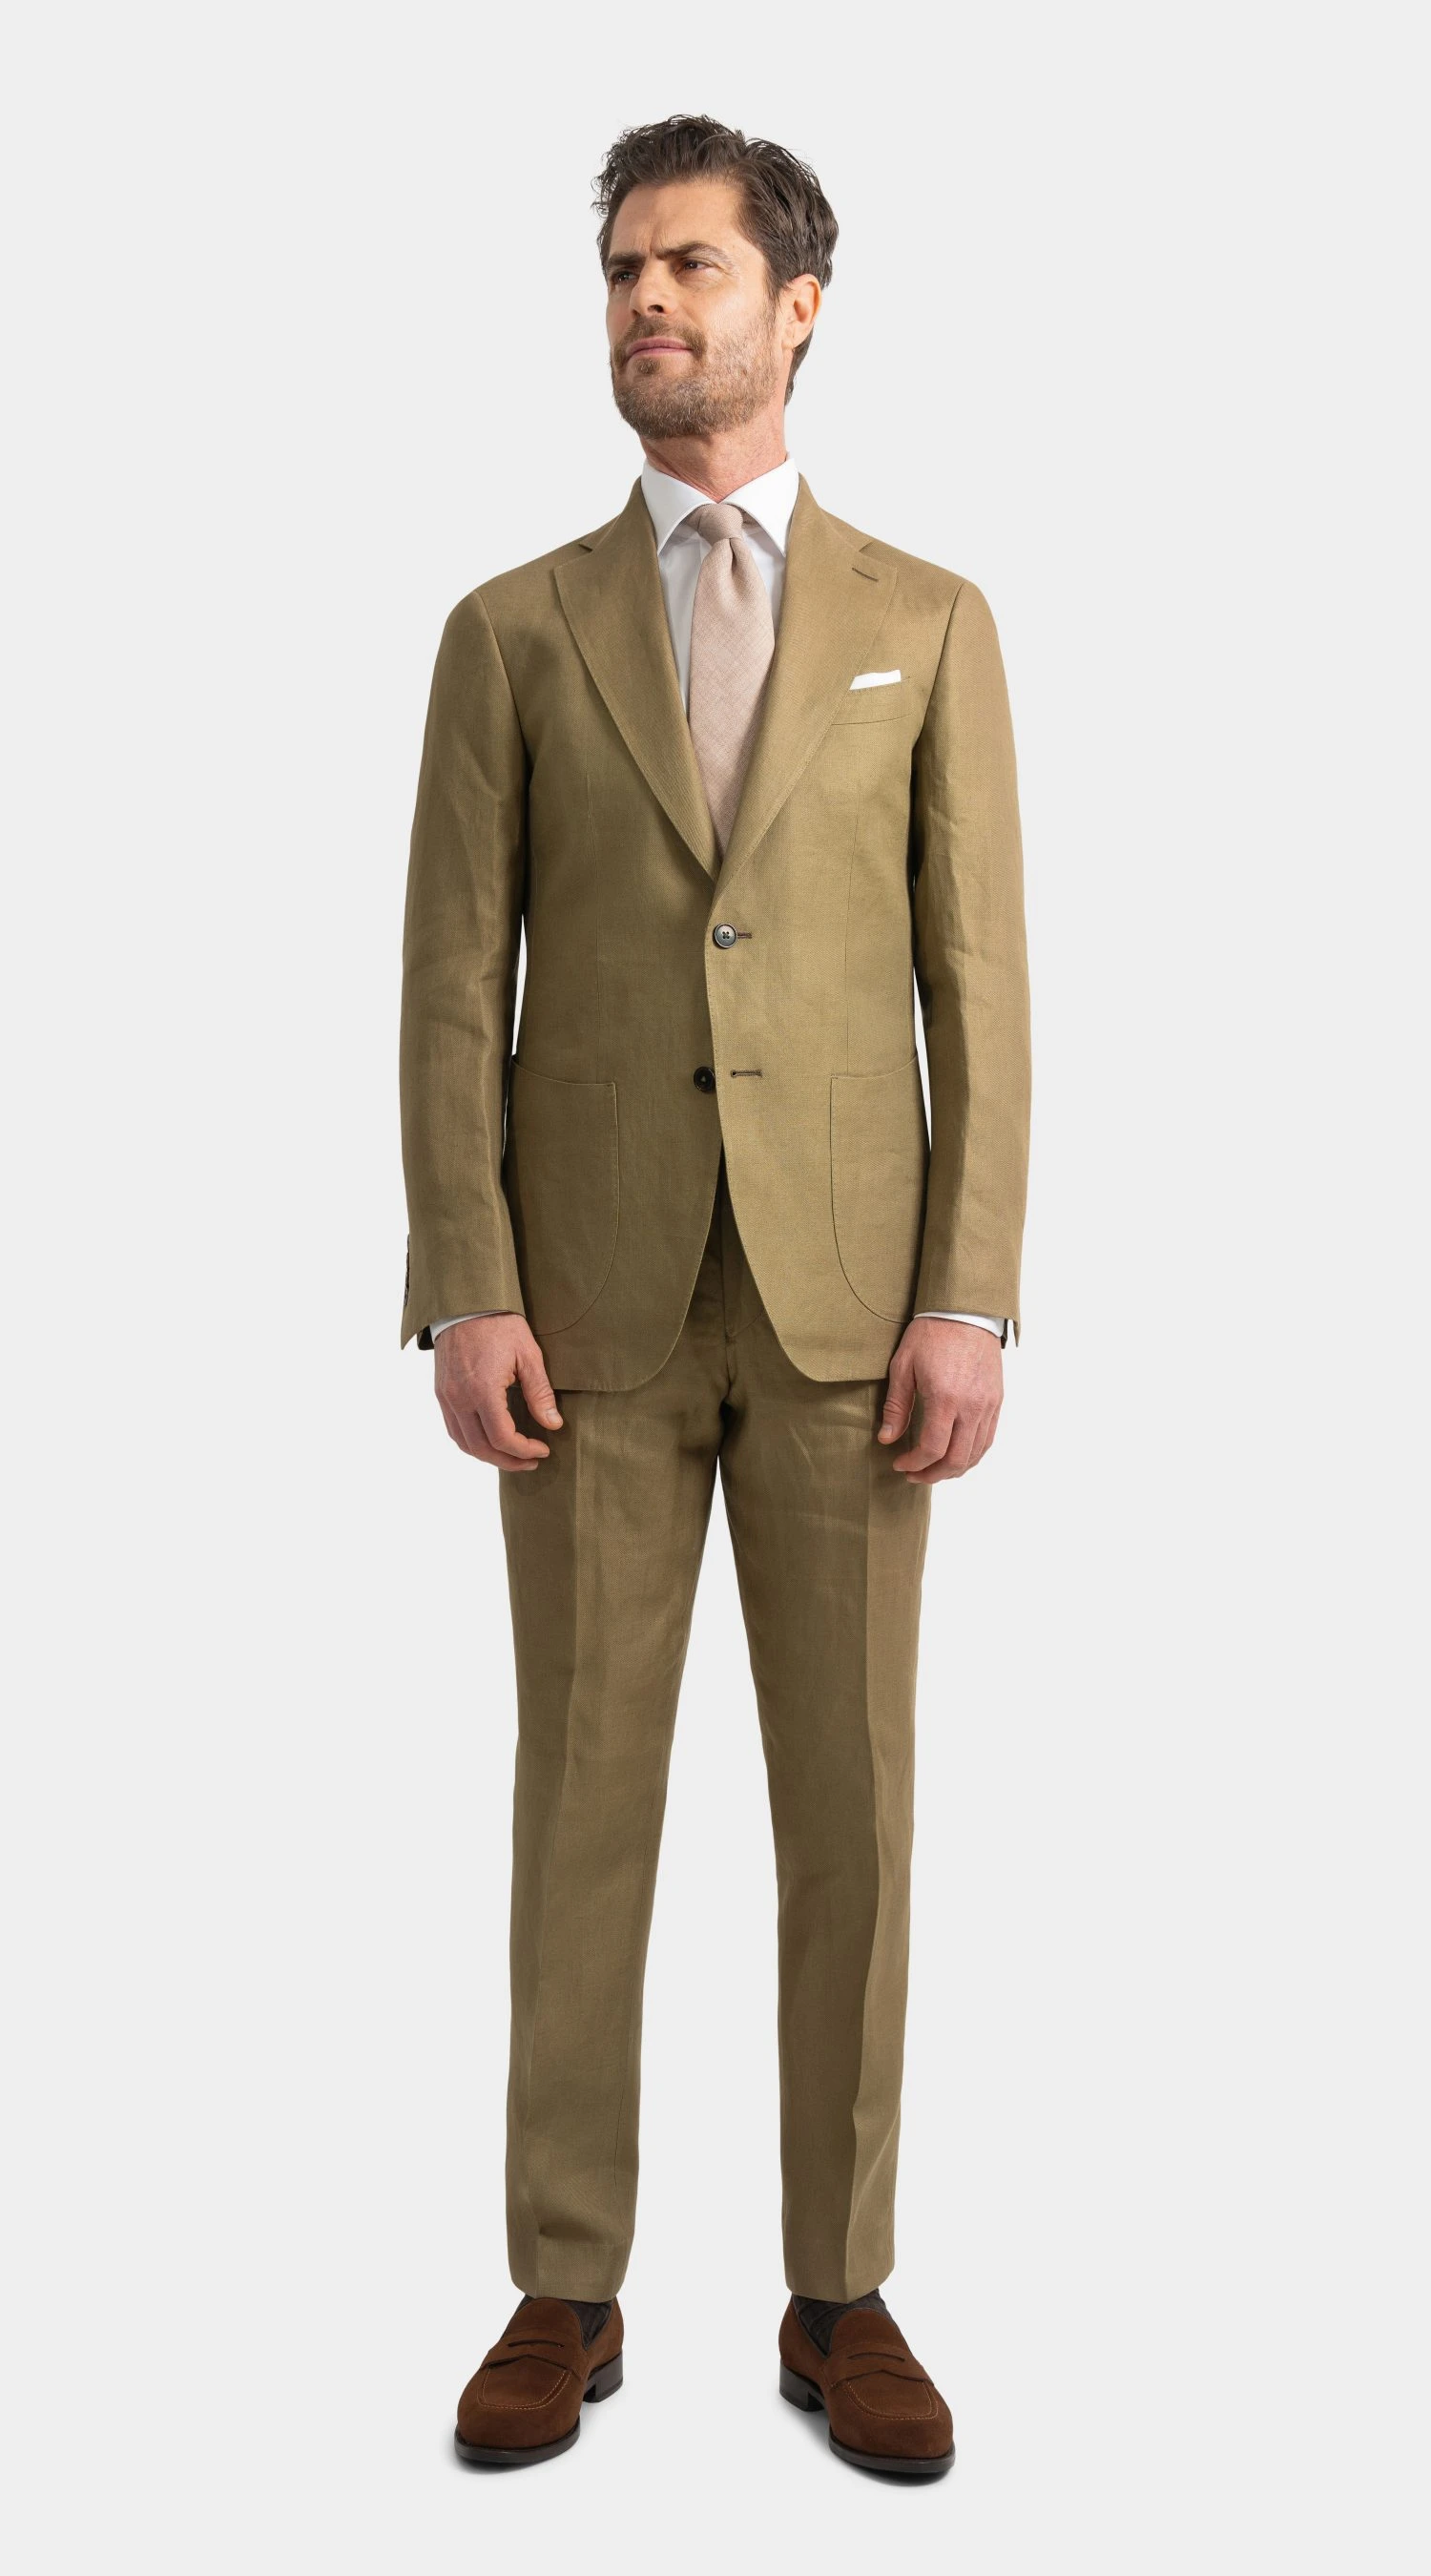 khaki linen suit, custom made by mond